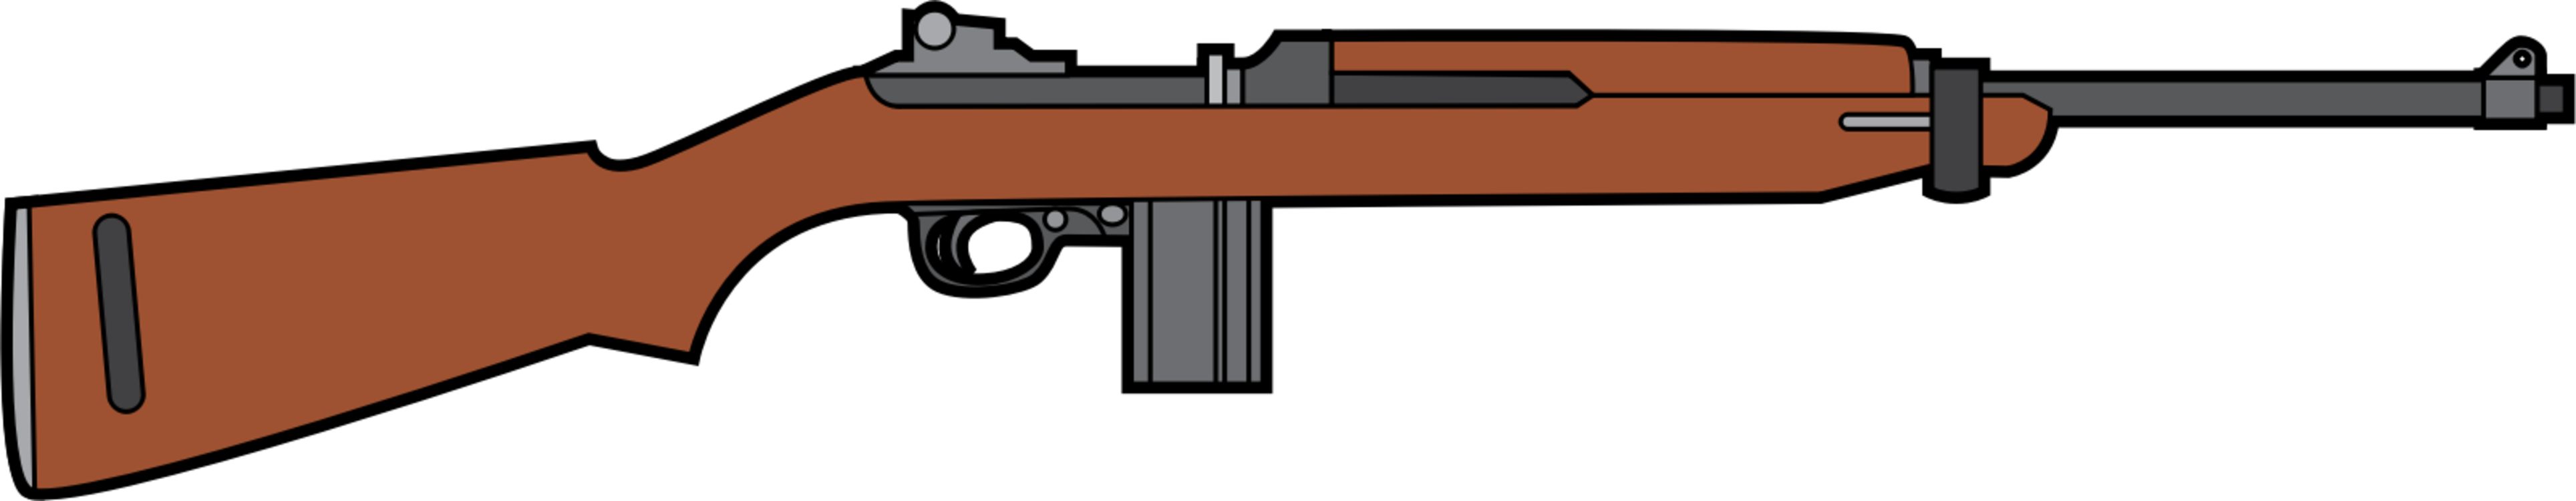 Machine Gun,Sniper Rifle,Gun Barrel